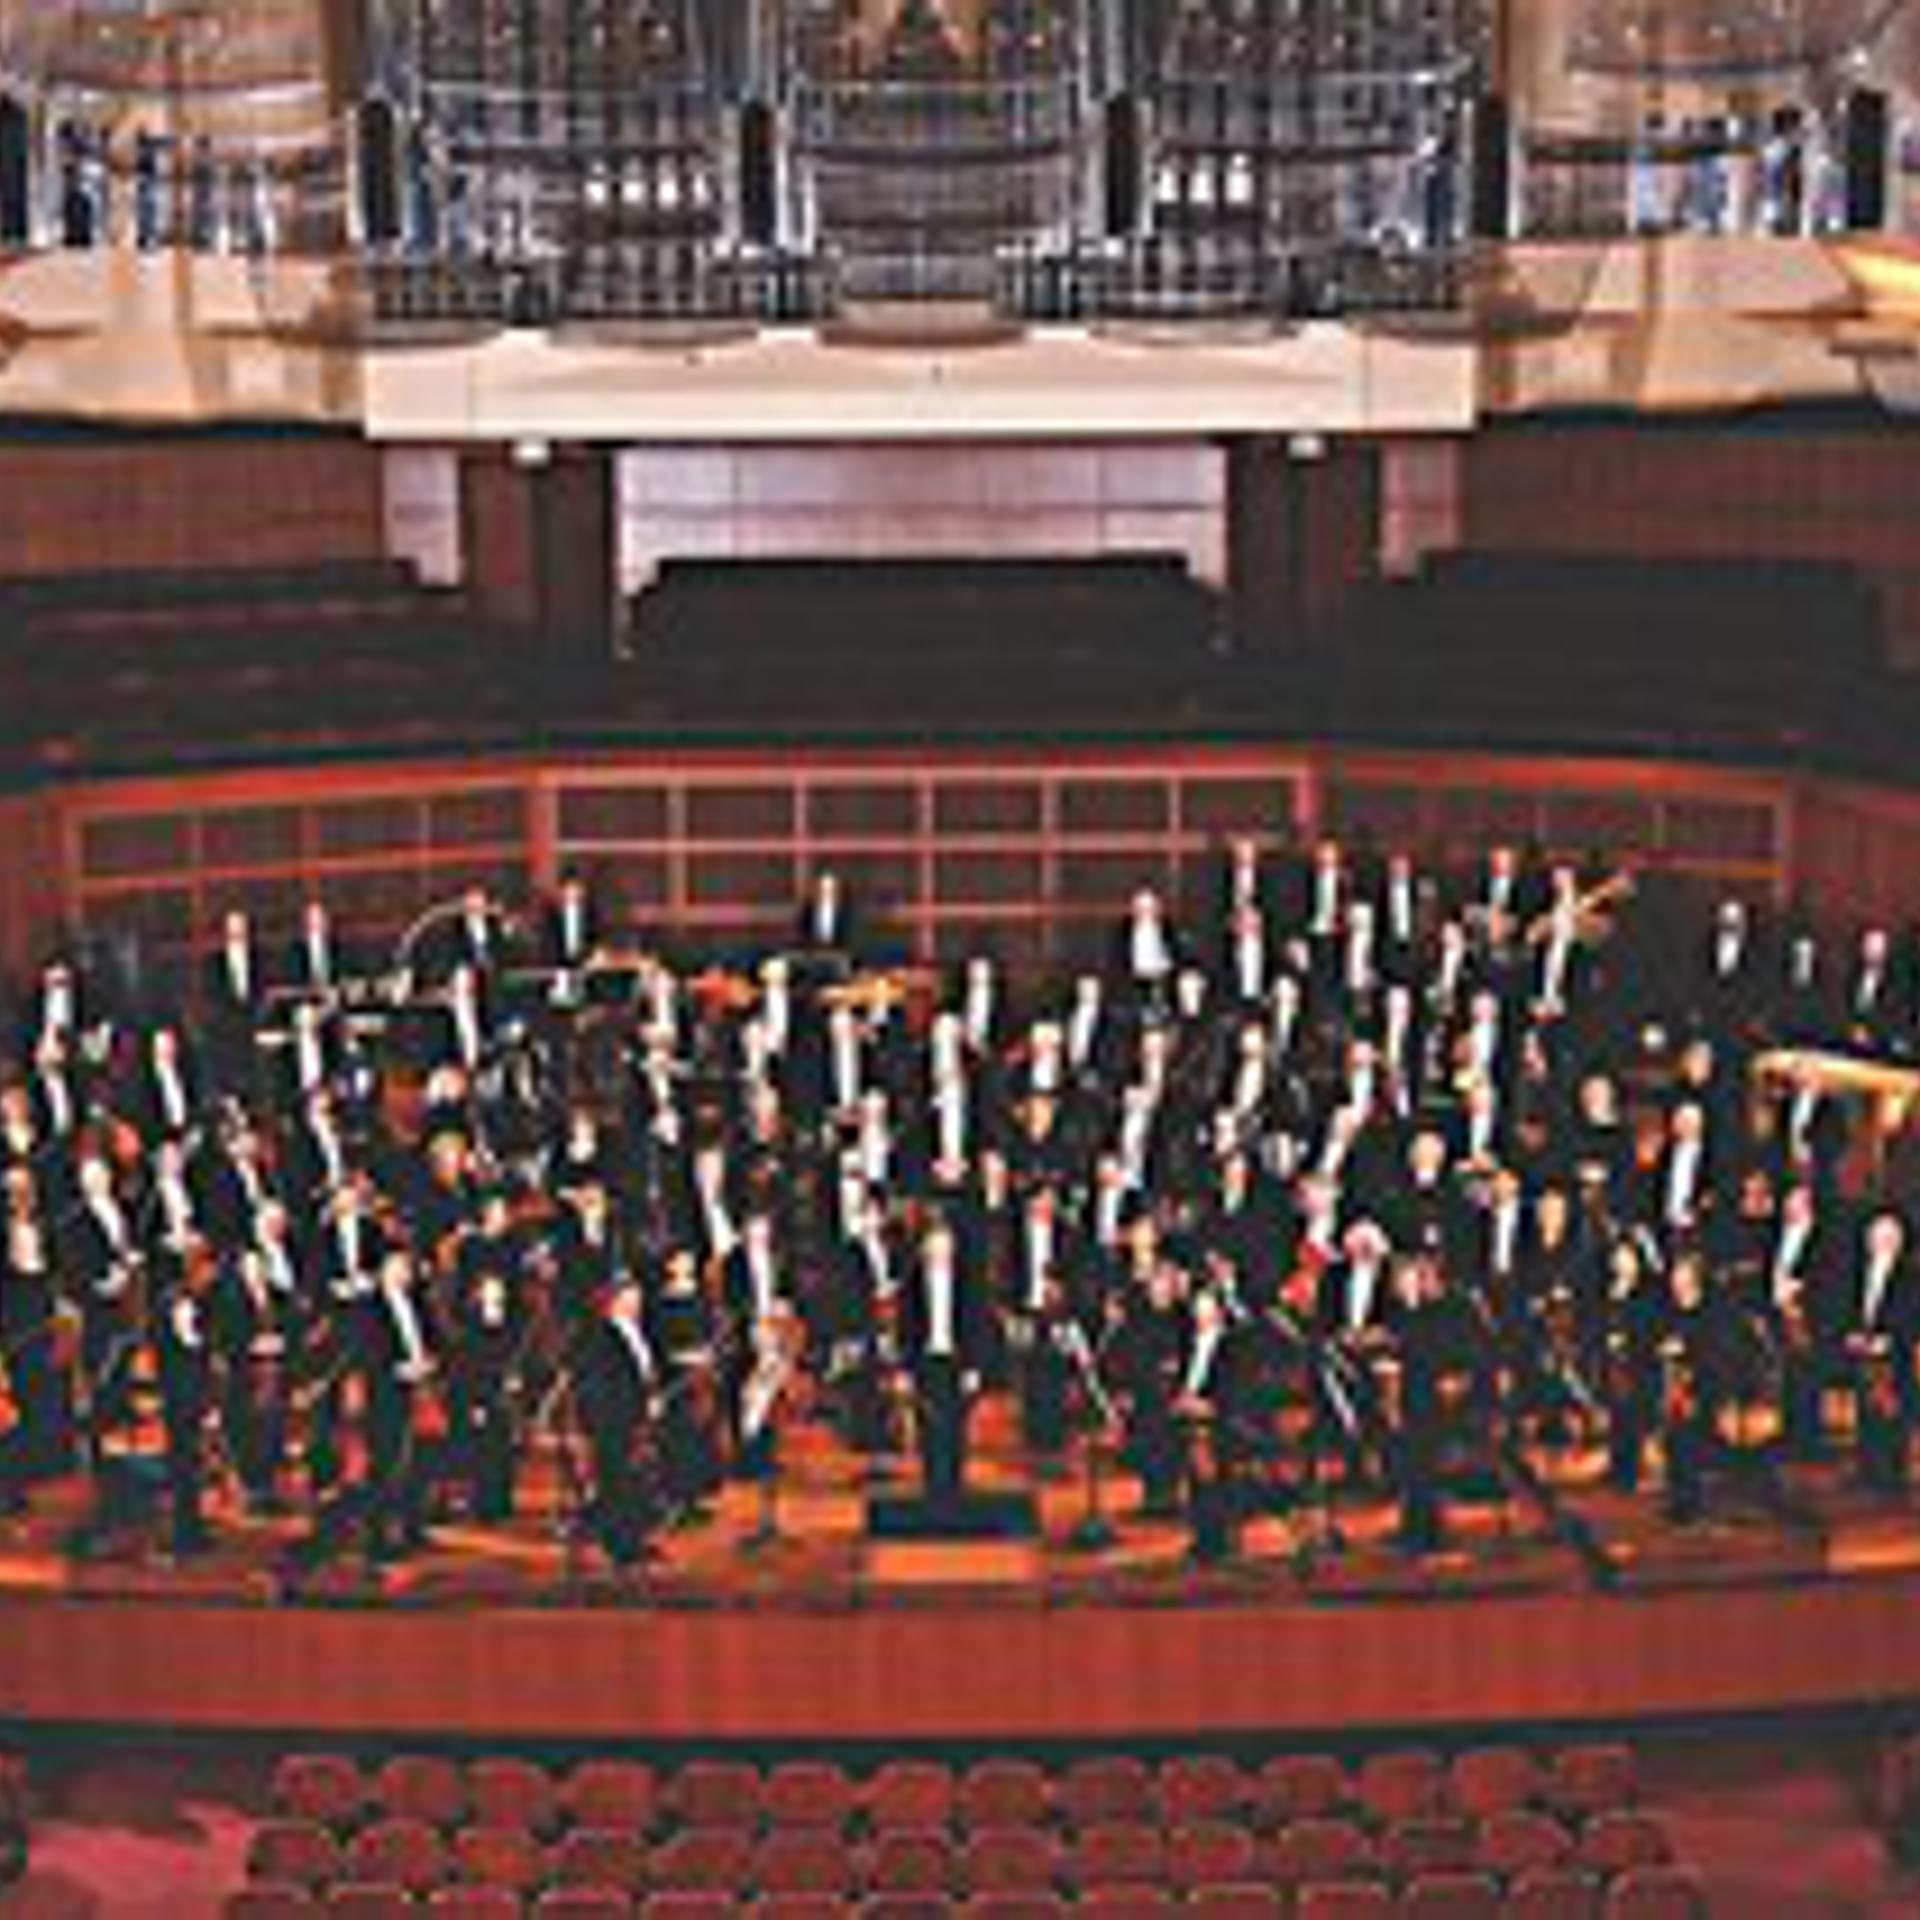 The San Francisco Symphony - фото